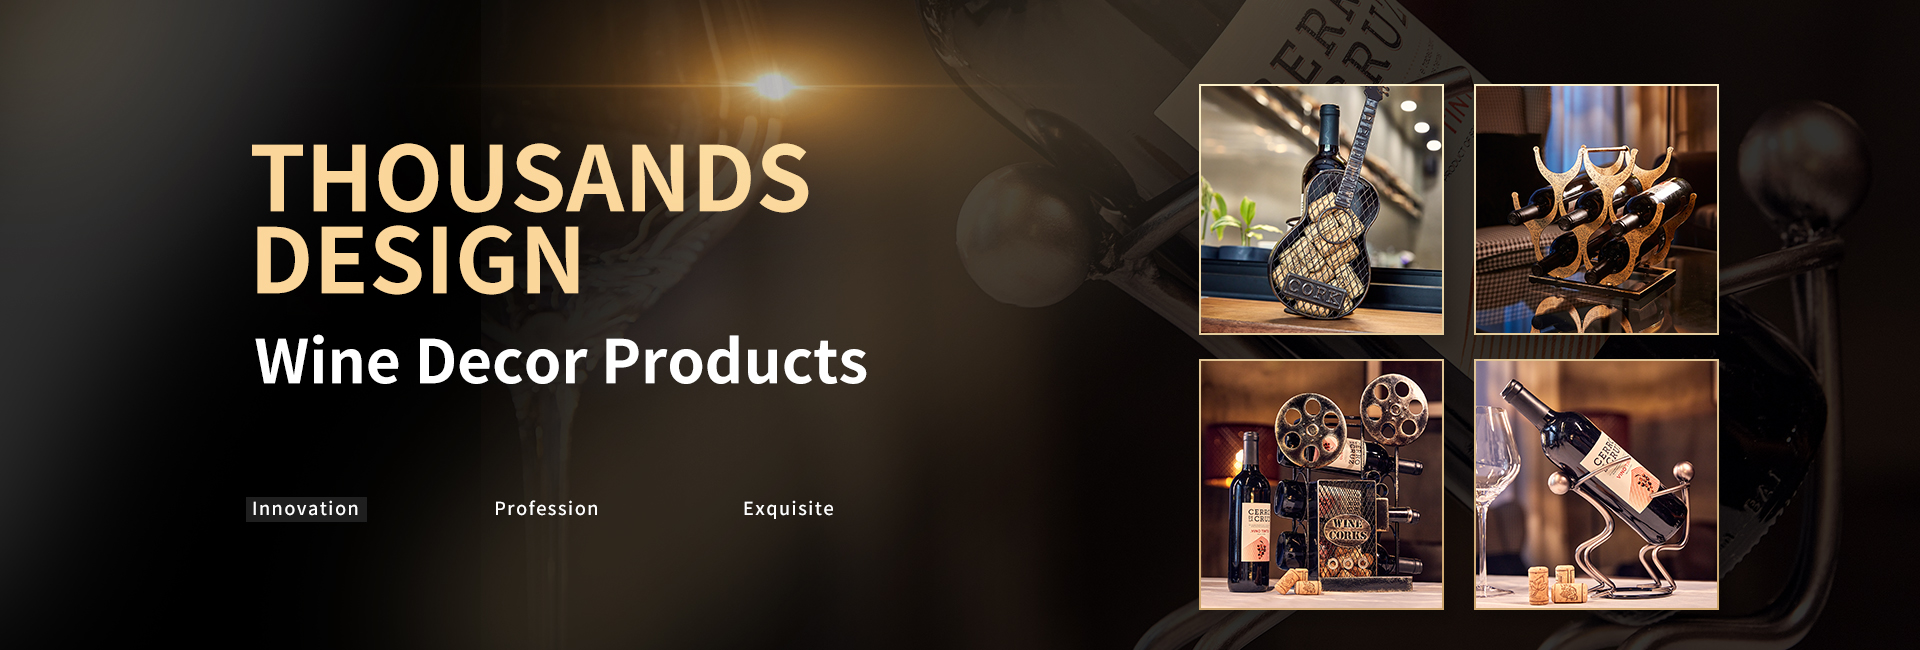 3. thousands design wine decor products